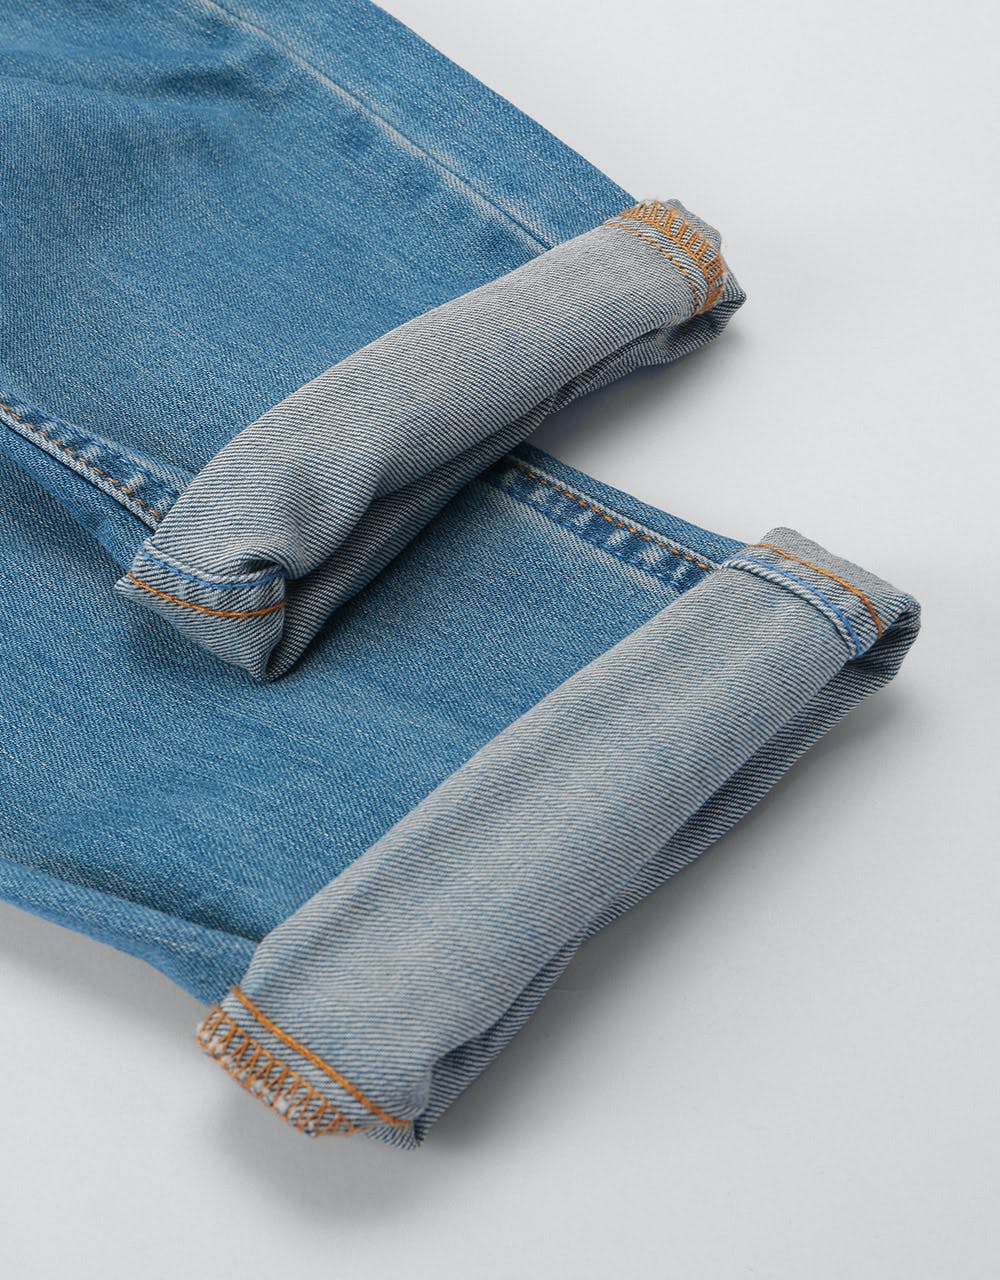 Dickies Rhode Island Denim Jeans - Light Blue